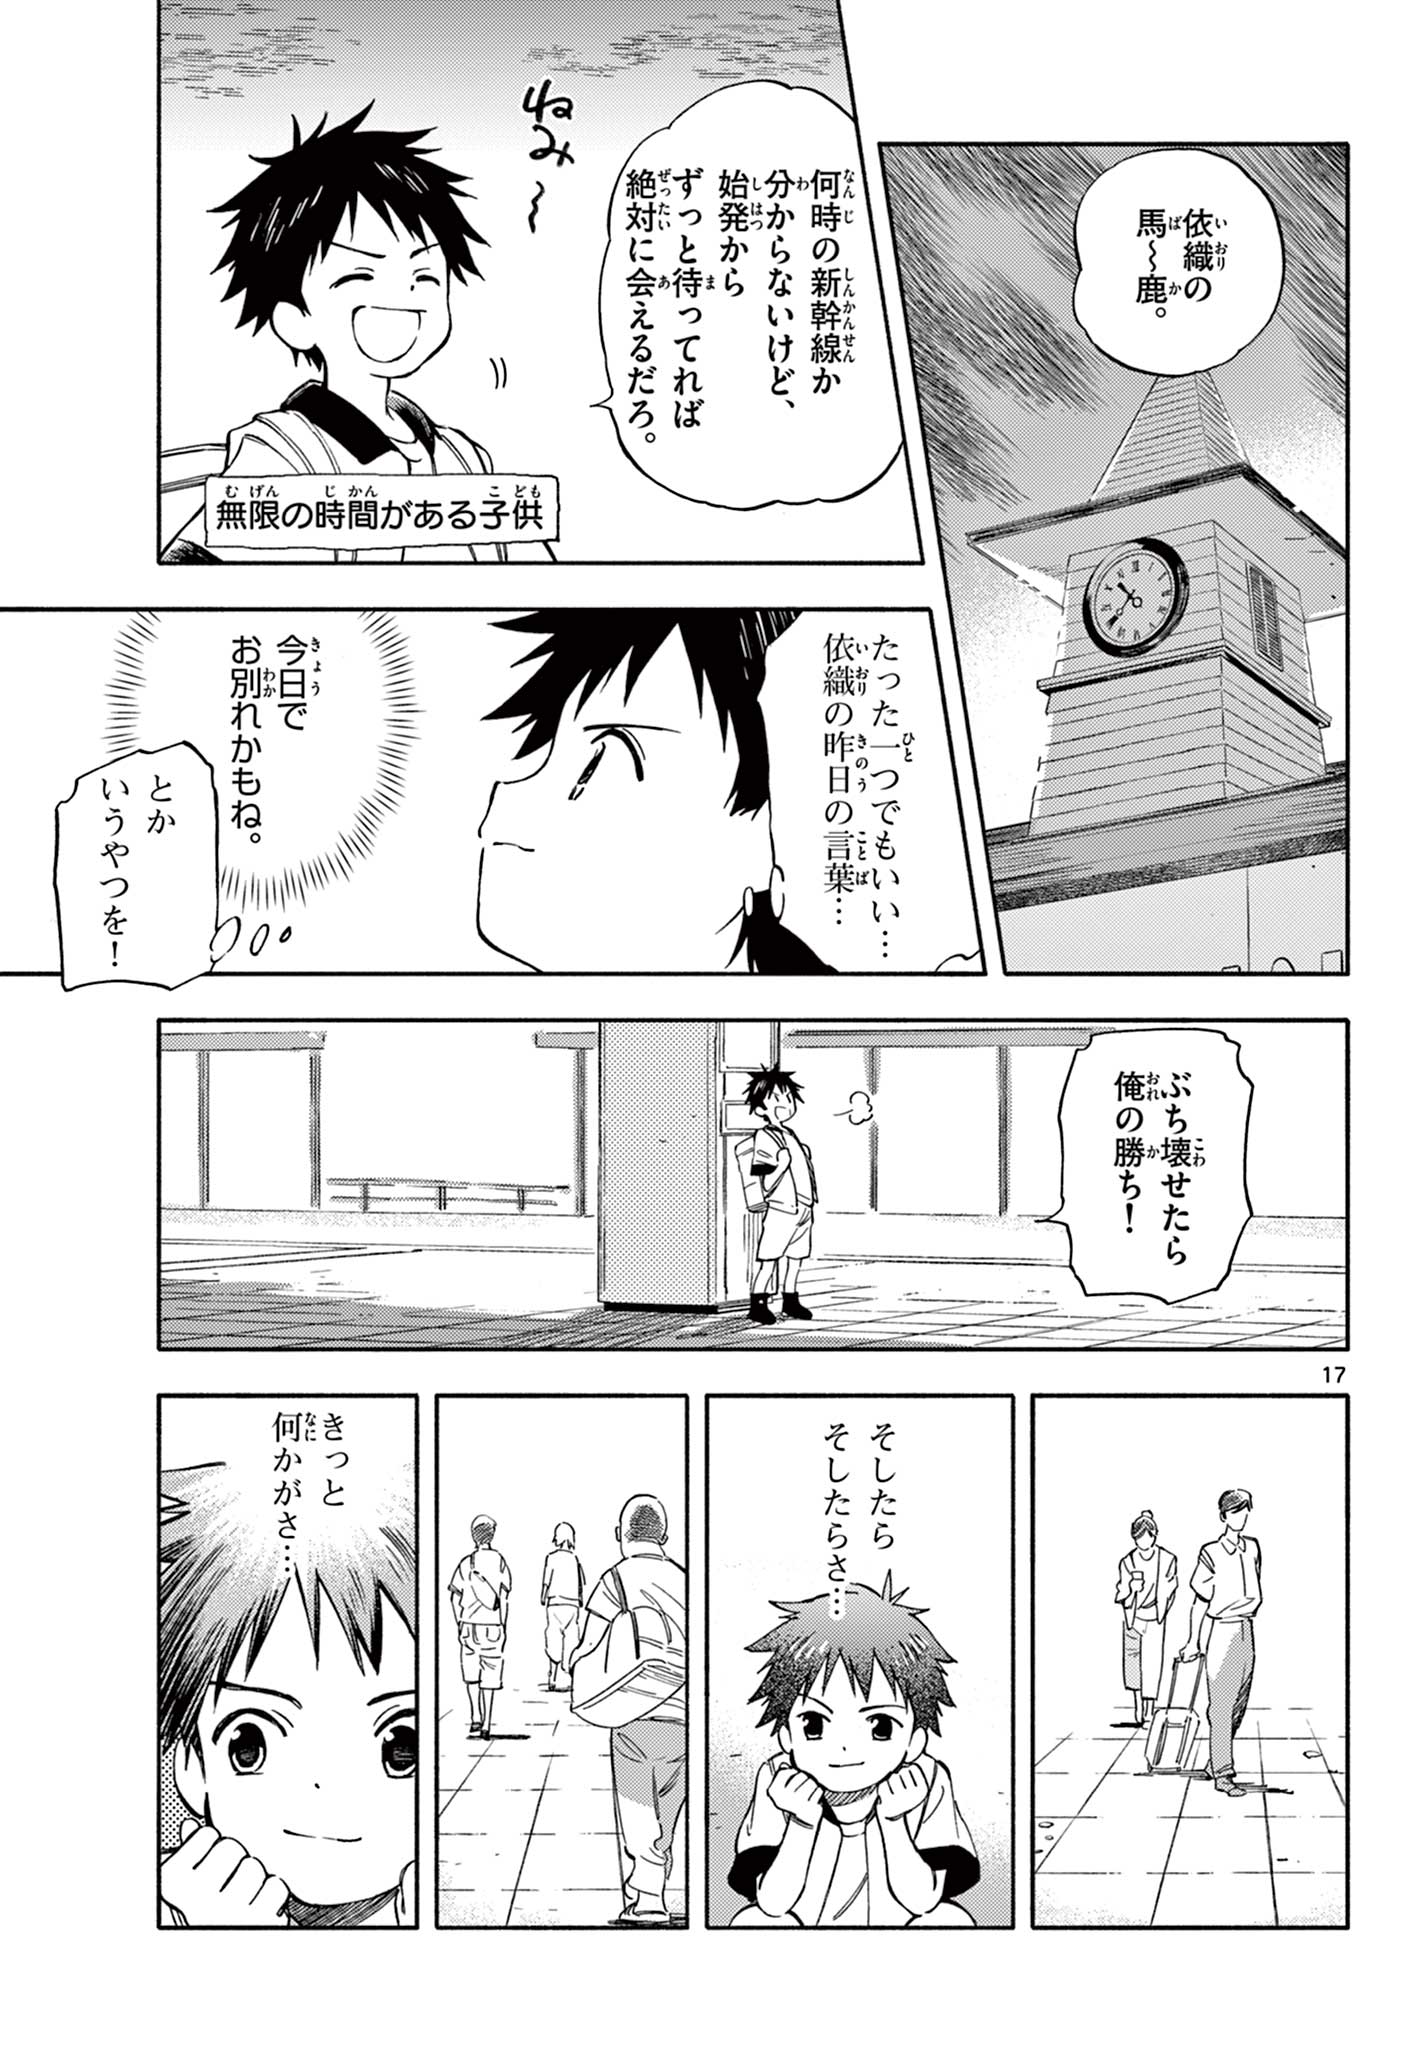 Nami no Shijima no Horizont - Chapter 13.1-2 - Page 5